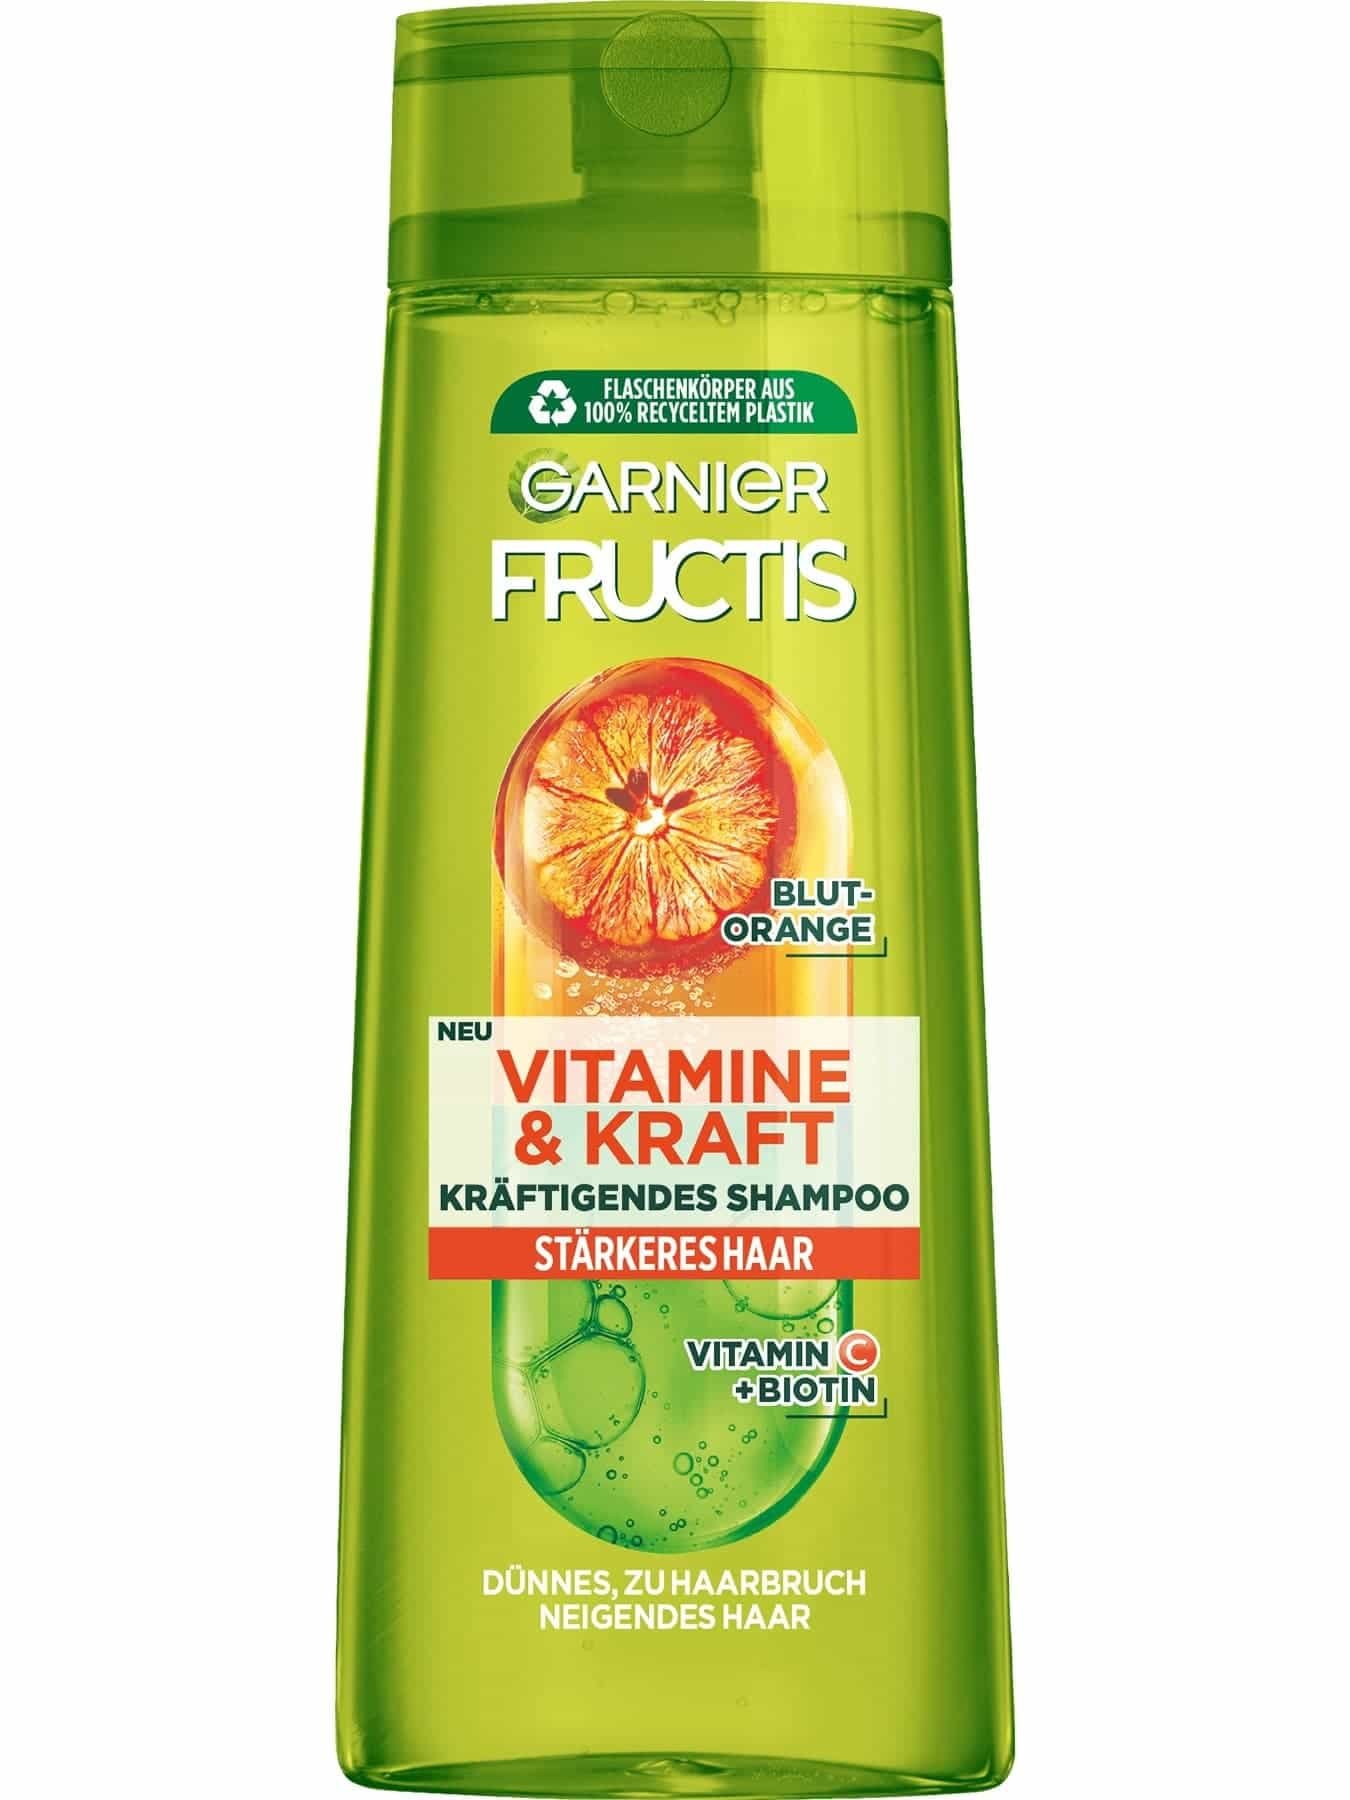 Fructis Vitamine & Kraft Kräftigendes Shampoo Produktbild